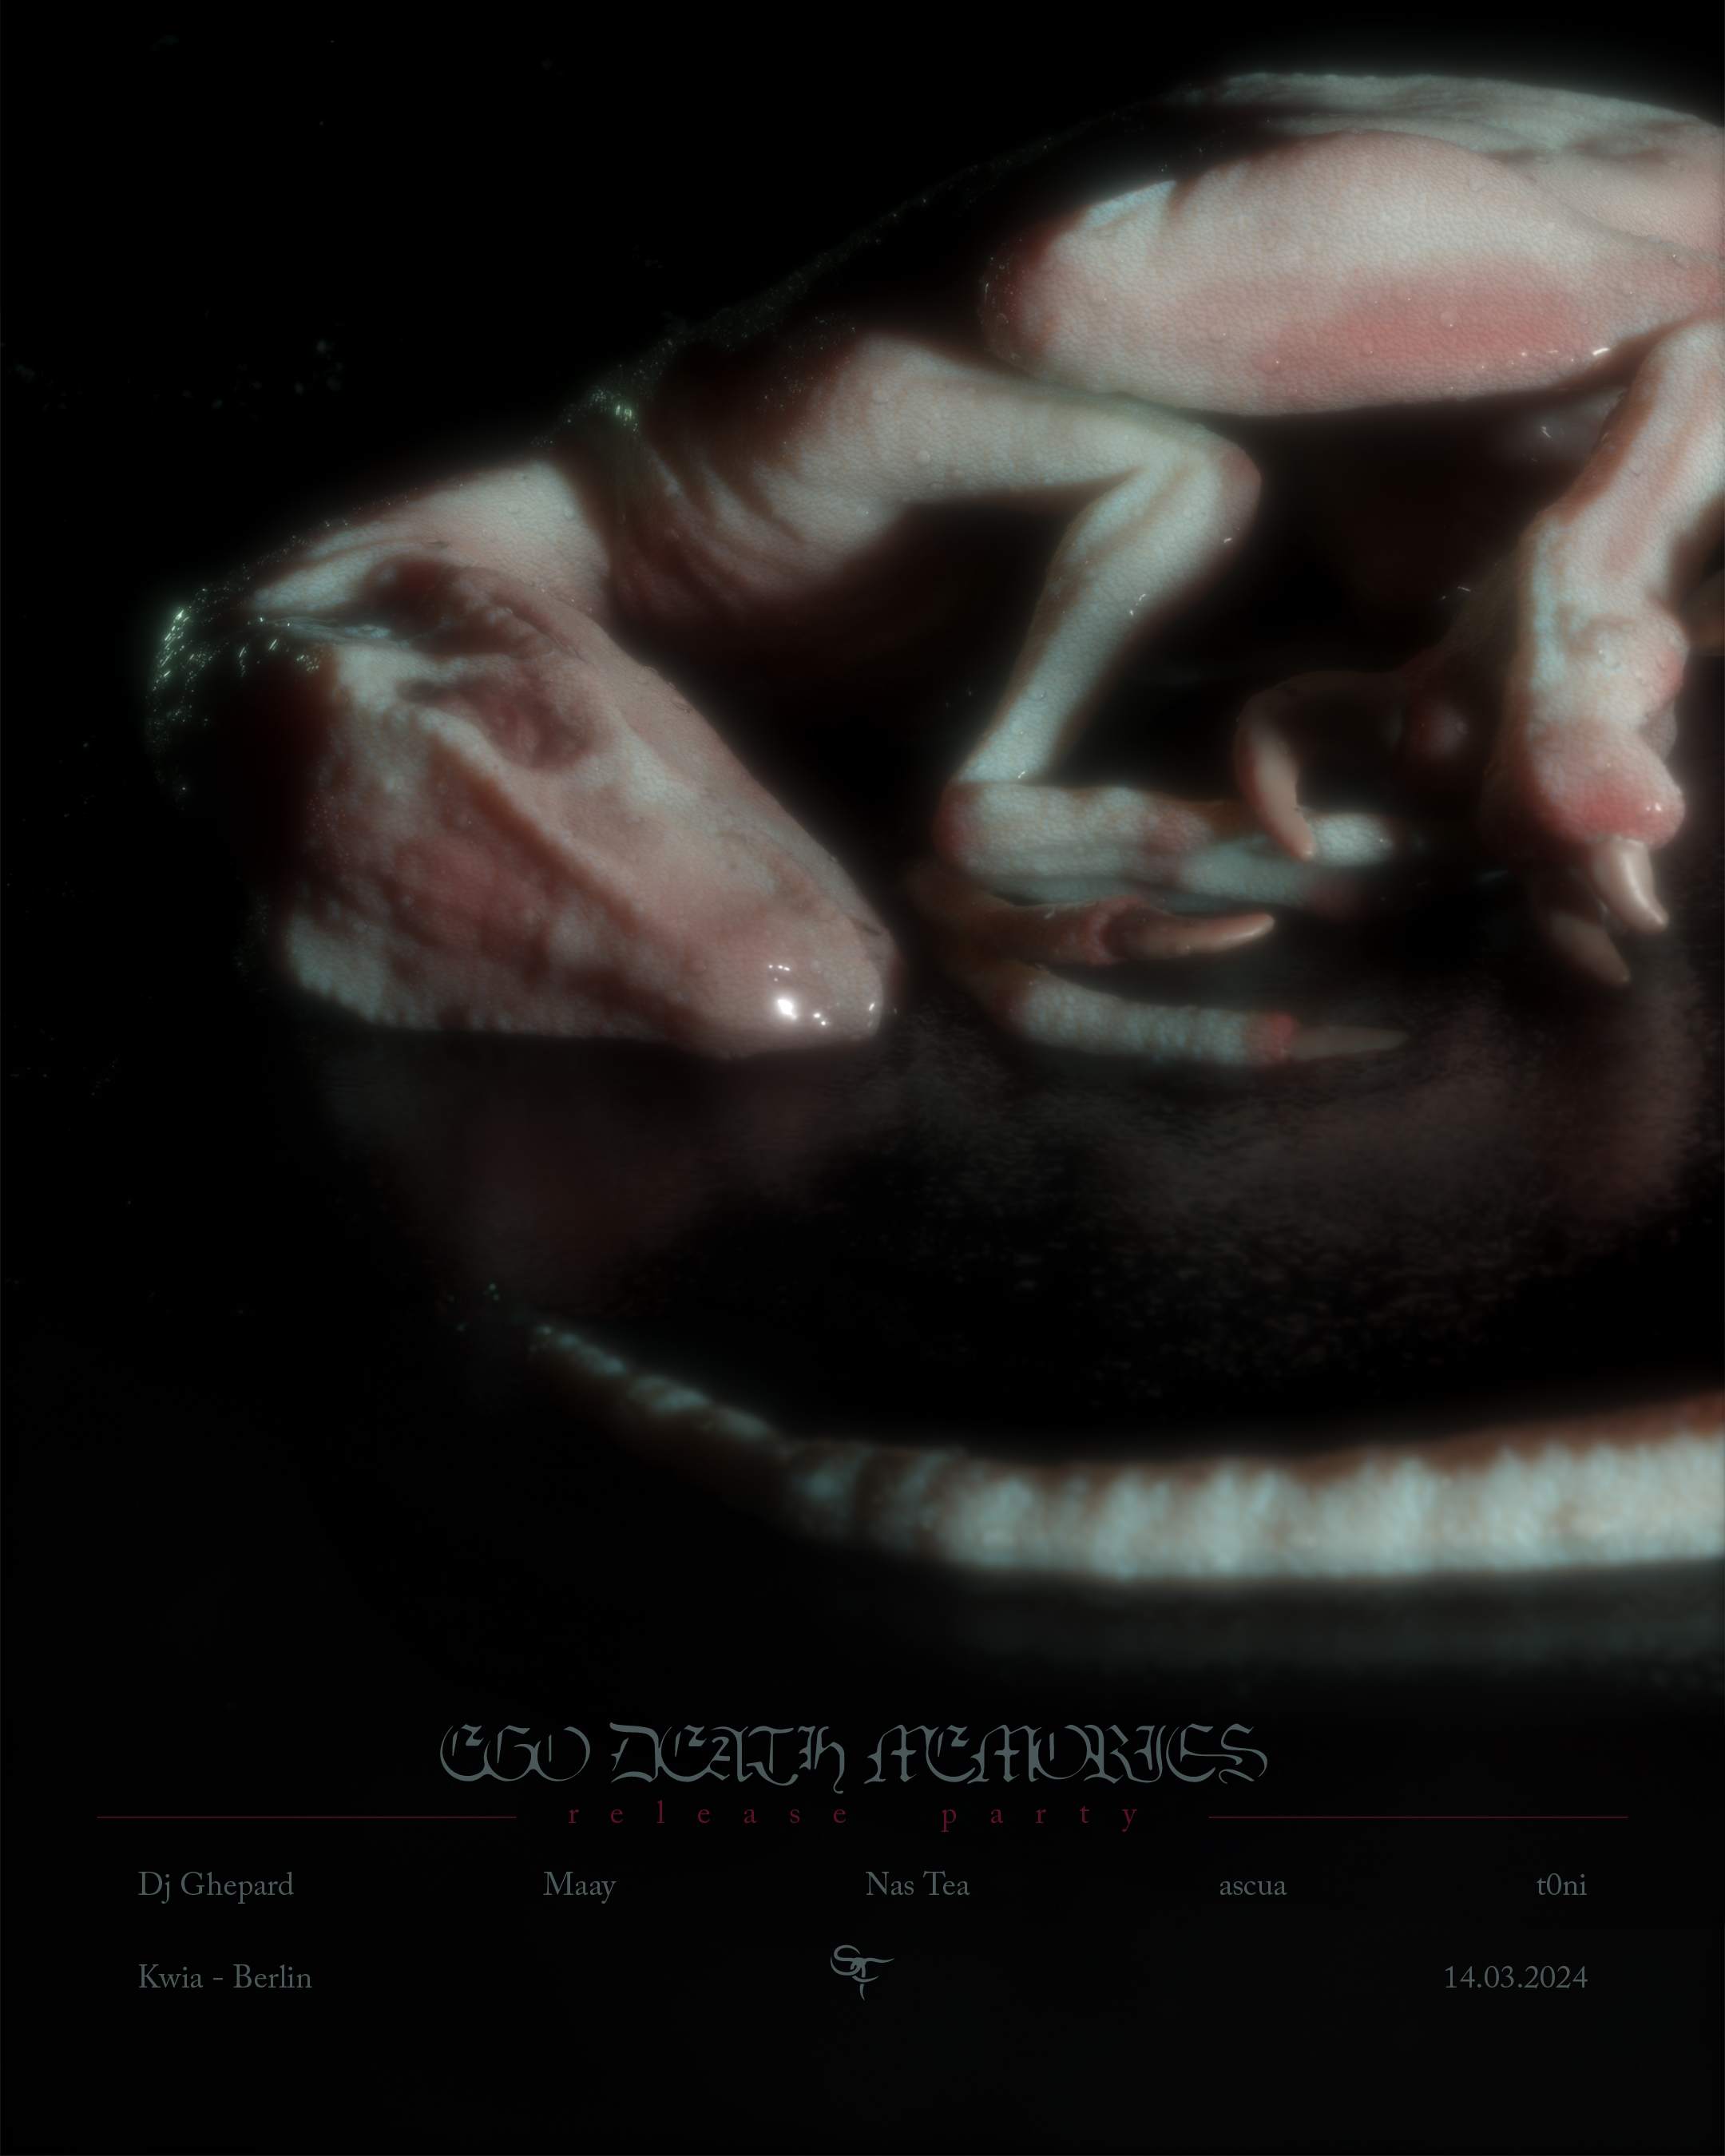 'Ego Death Memories' by t0ni Release Party with t0ni, NAS TEA, MAAY, ascua & DJ GHEPARD - Página frontal